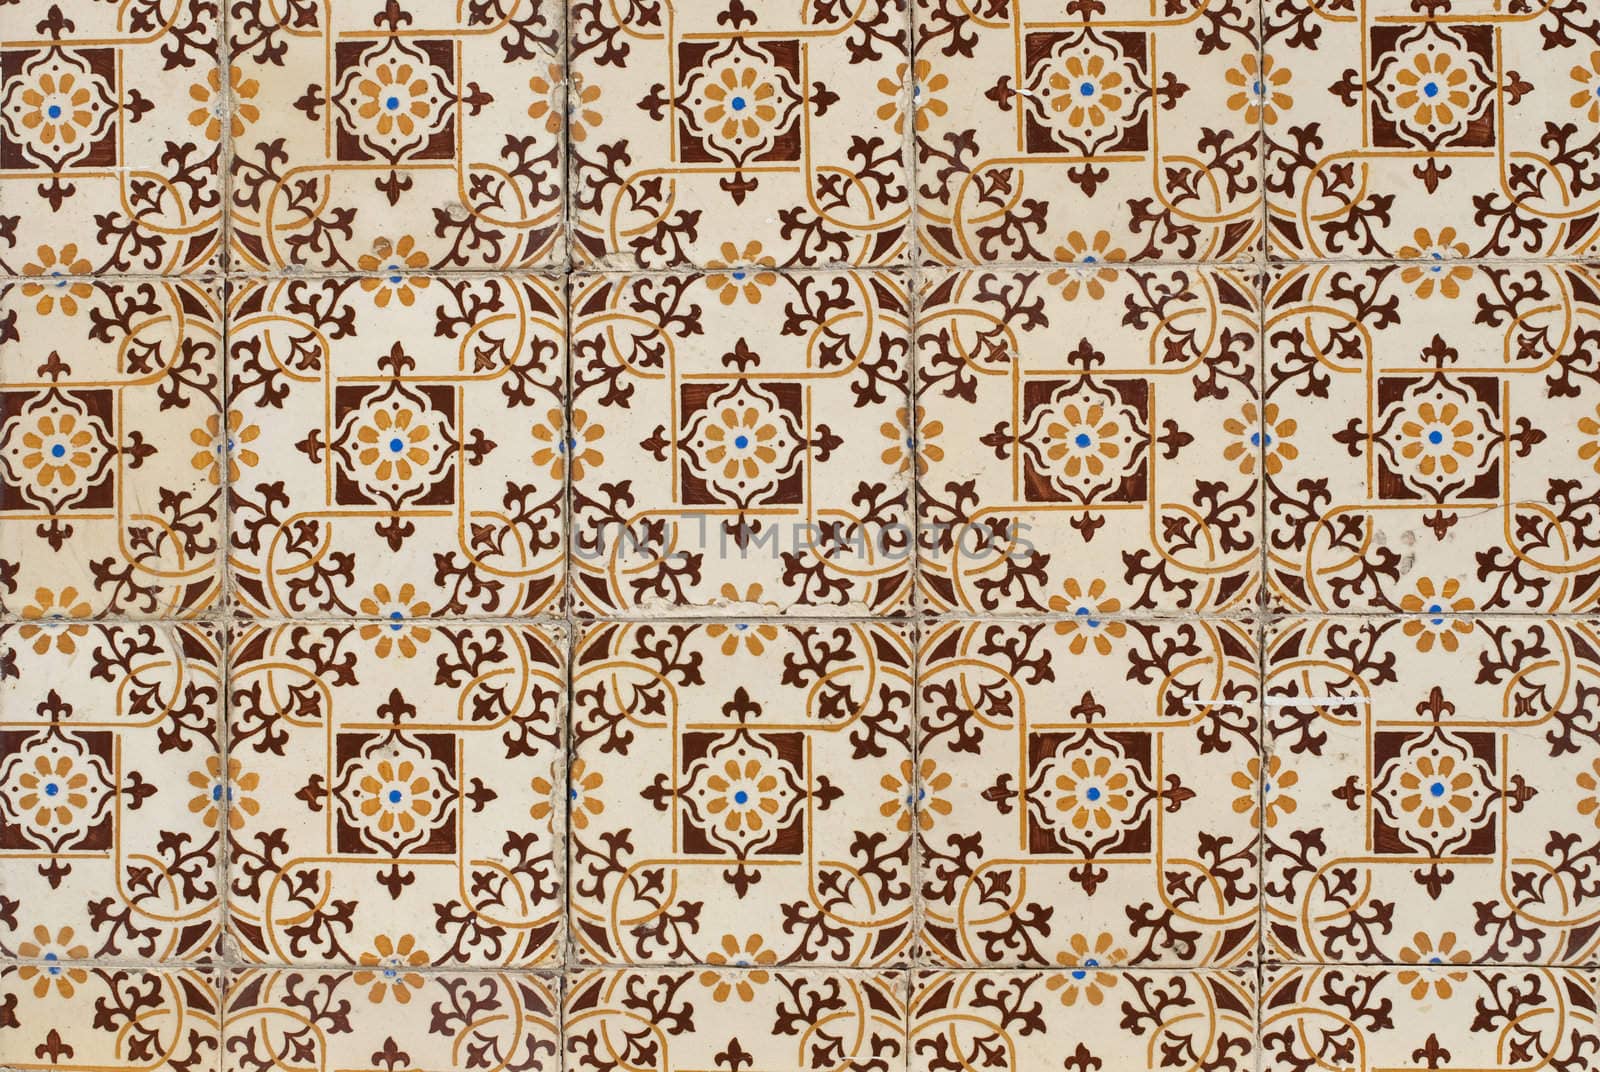 Portuguese glazed tiles 125 by homydesign